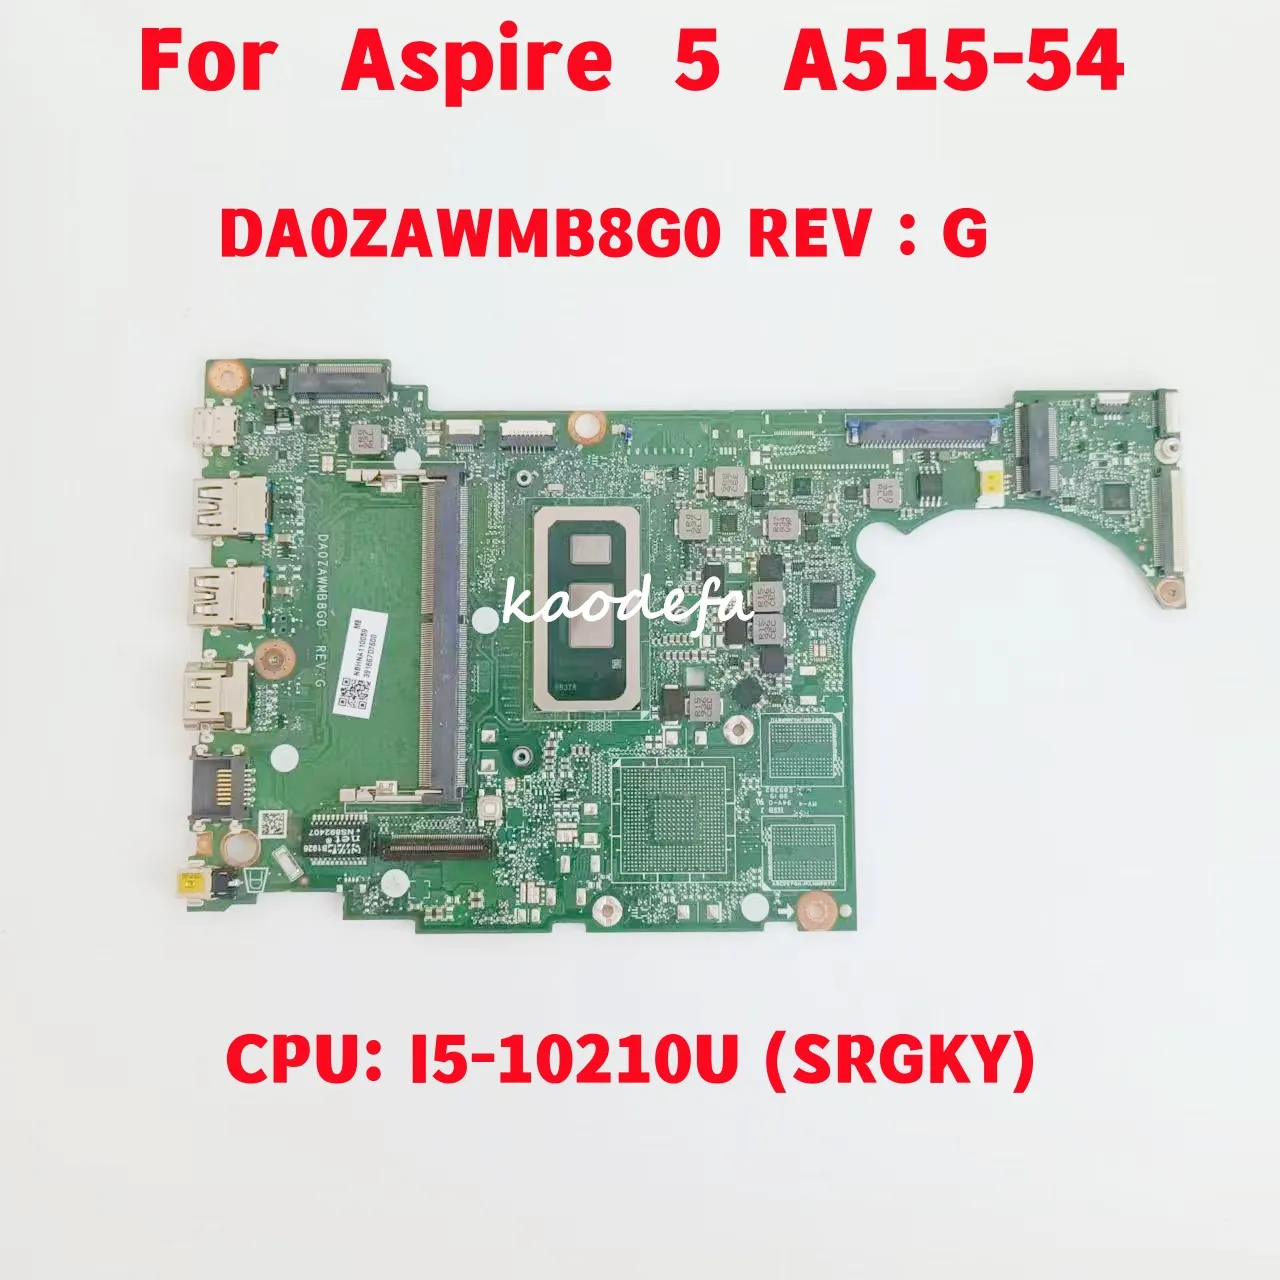 

DA0ZAWMB8G0 Mainboard For ACER Aspire 5 A515-54 Laptop Motherboard CPU: I5-10210U SRGKY UMA DDR4 100% Tested Fully OK